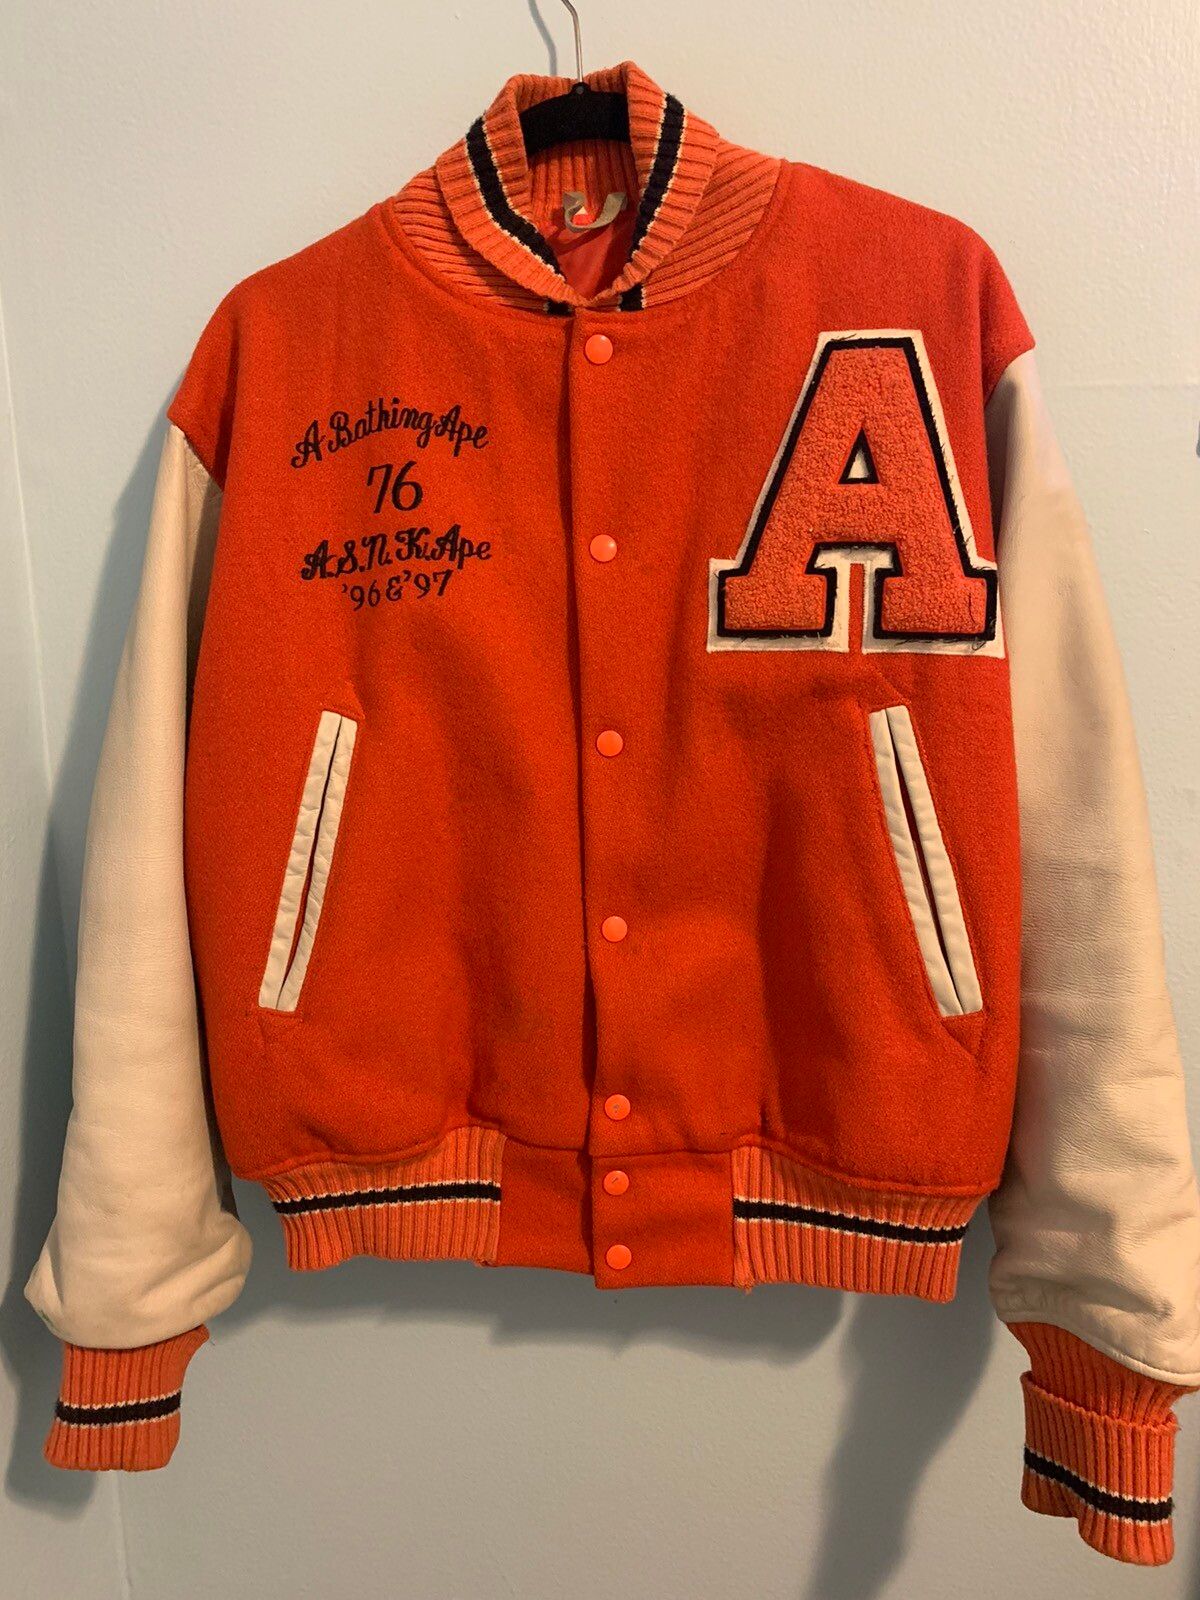 Bape 96’ & 97’ Orange Bape Varsity Jacket - Size M Size US M / EU 48-50 / 2 - 1 Preview